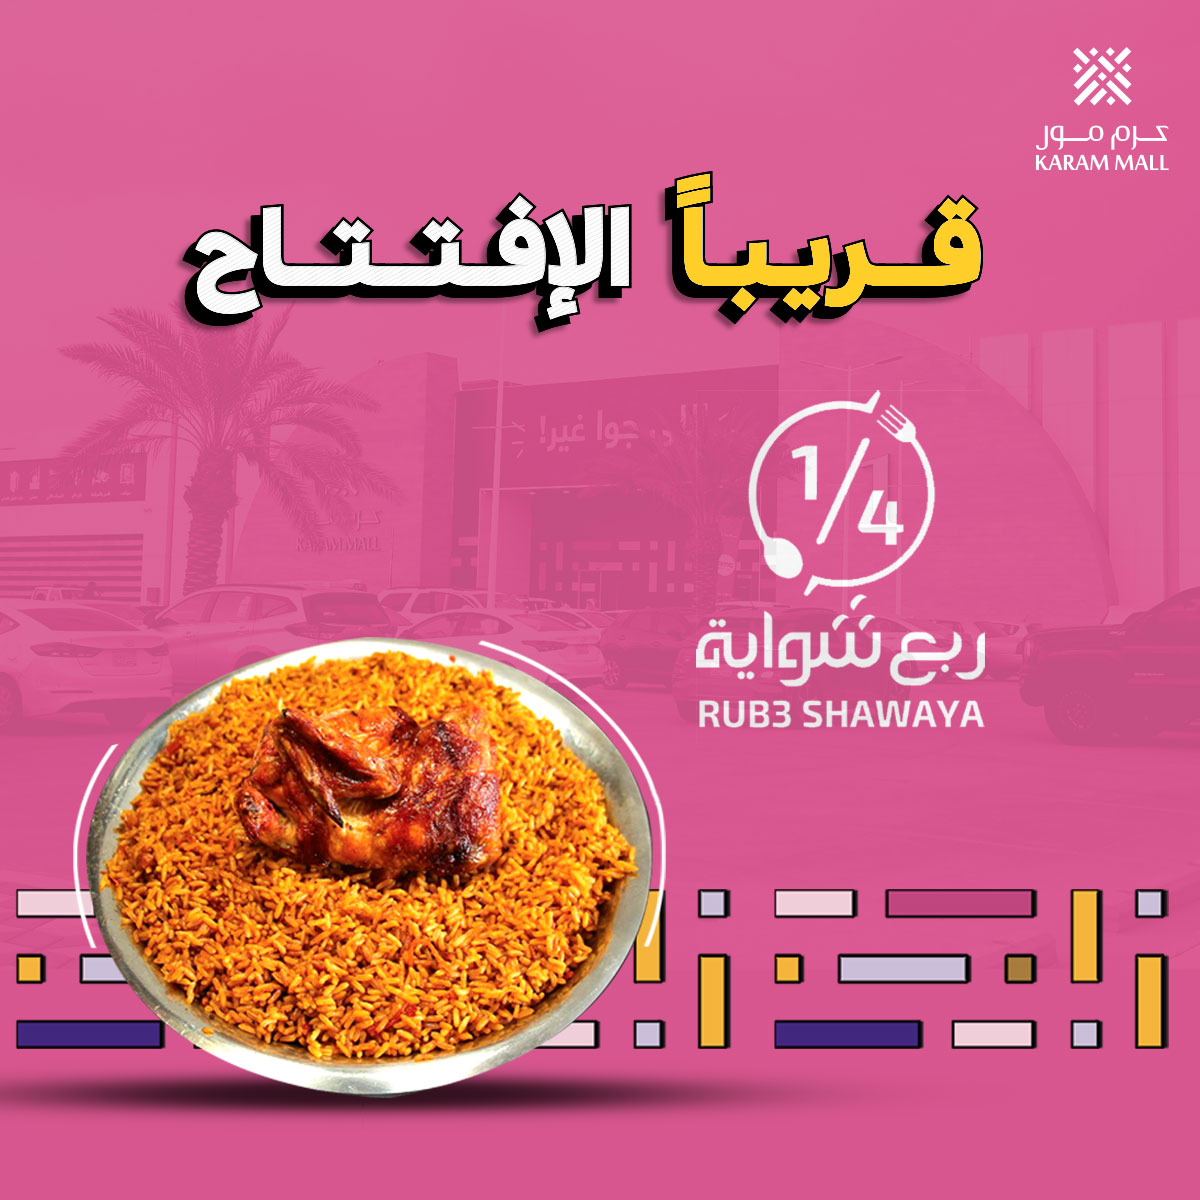 Rub3 Shawaya Restaurant Opening Soon